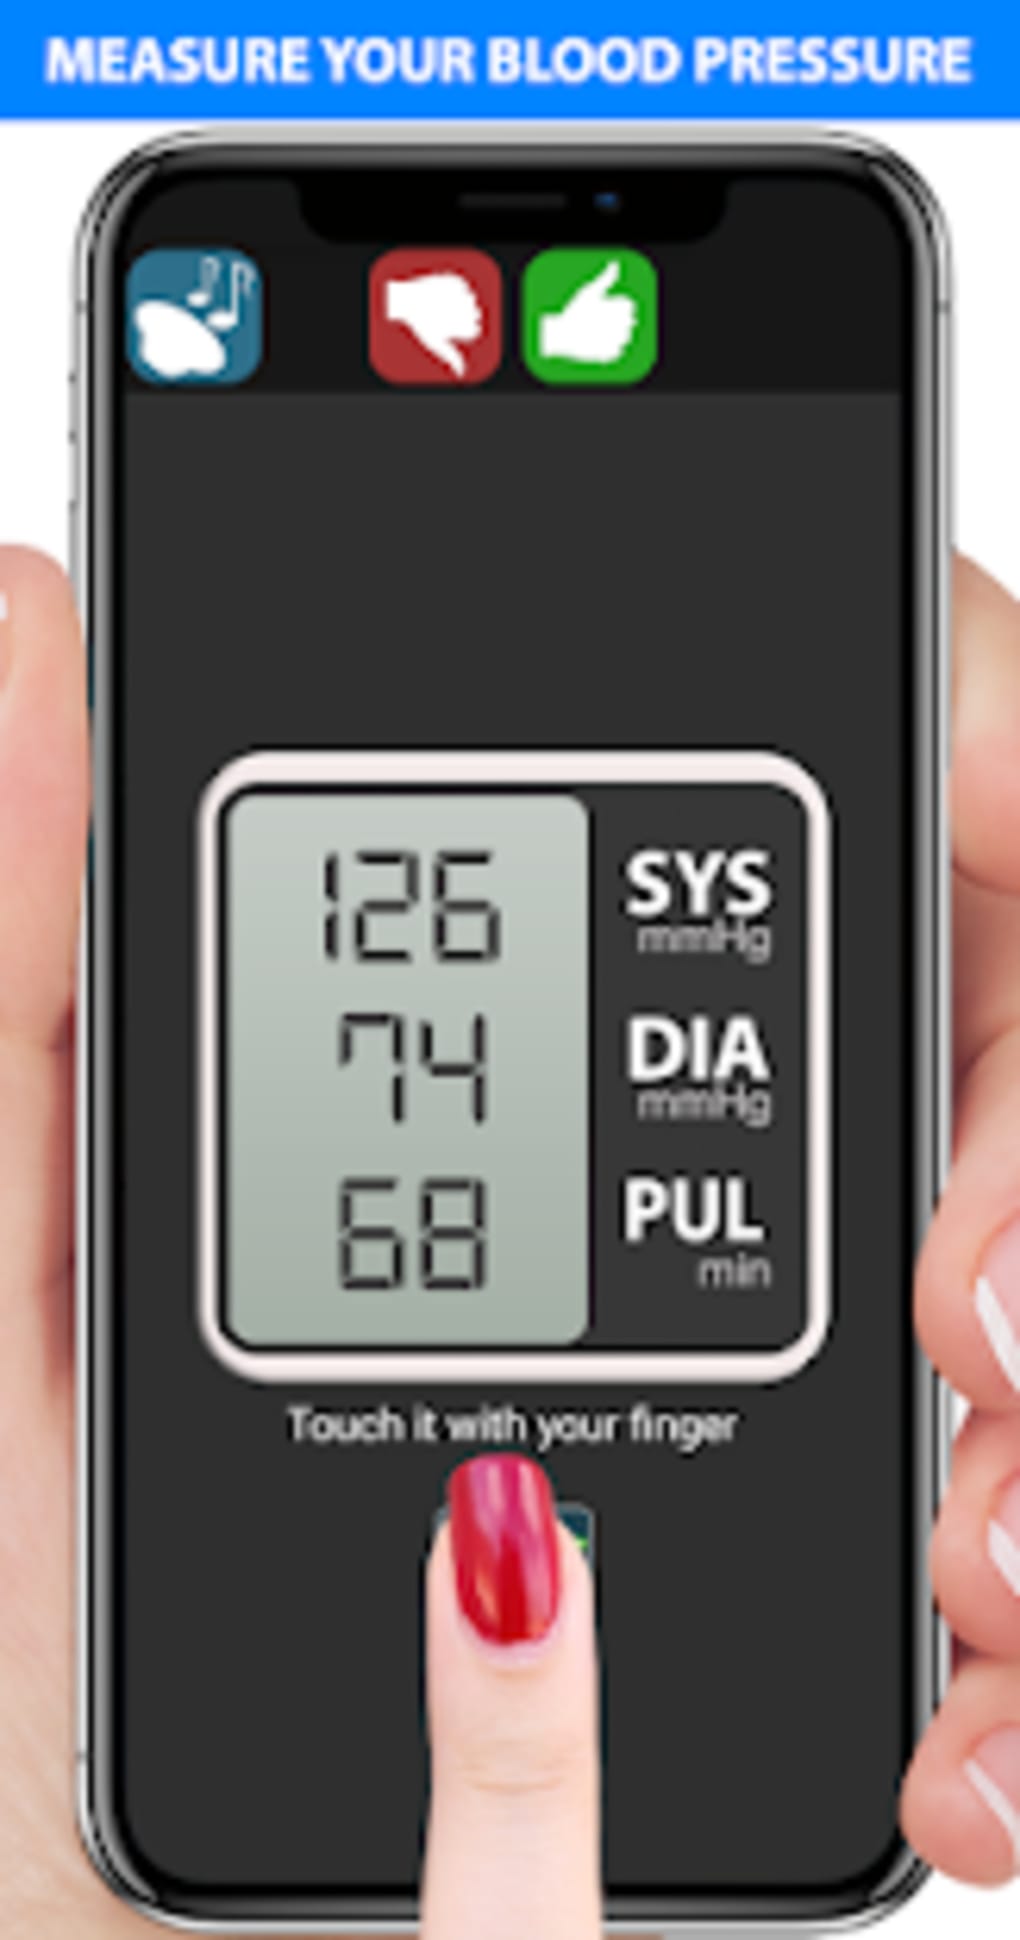 https://images.sftcdn.net/images/t_app-cover-l,f_auto/p/e2ce54a2-a135-11e8-9328-02420a000b51/1429481533/blood-pressure-fingerprint-scanner-screenshot.png